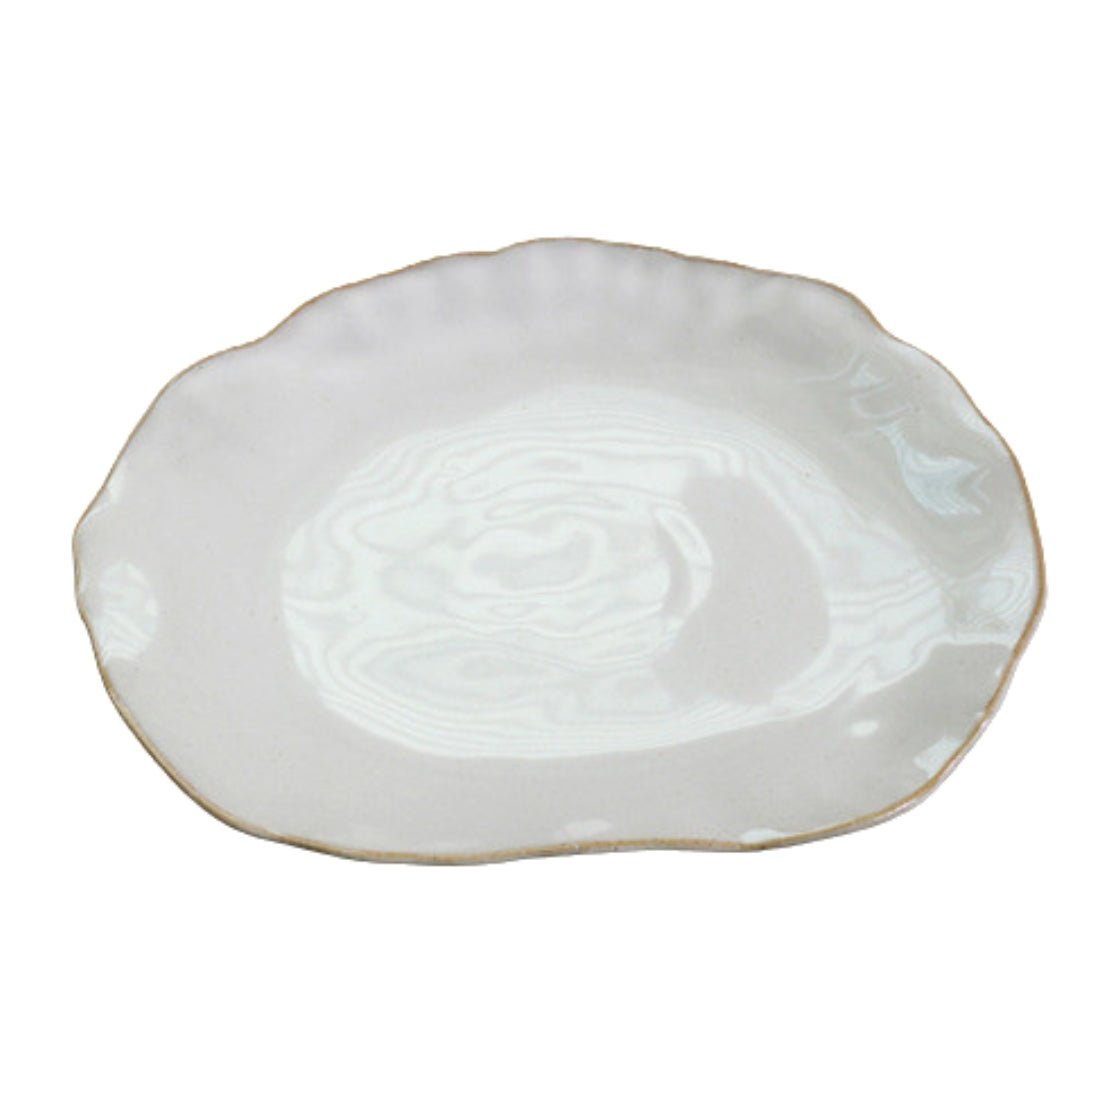 Asymmetrical white dining plate